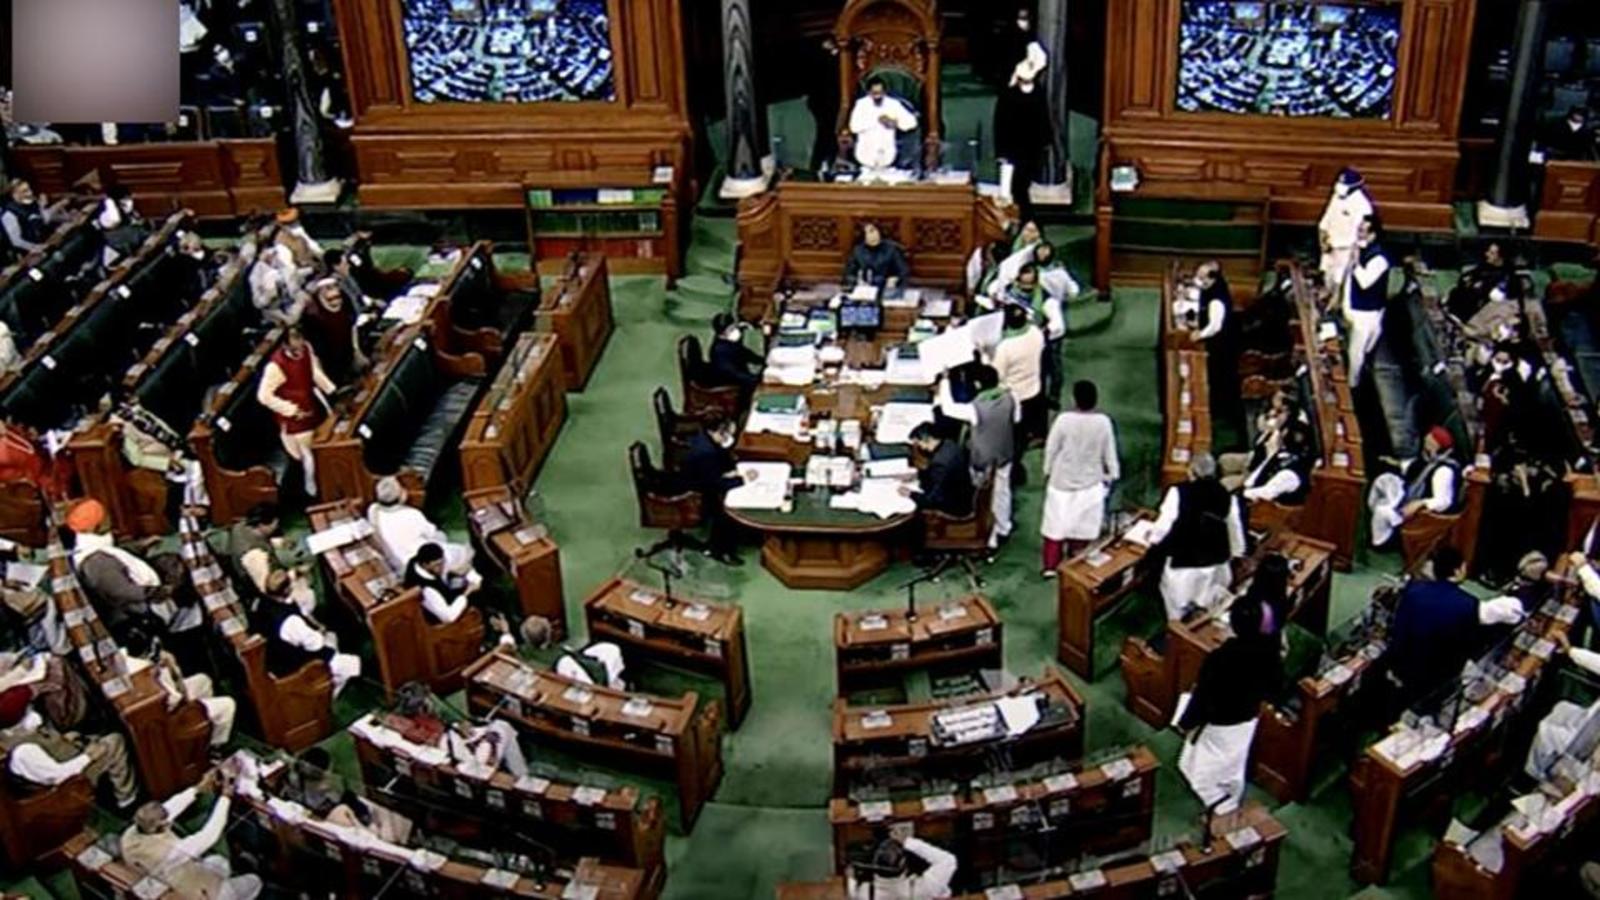 Judges’ salaries and service amendment Bill to be tabled in Lok Sabha - Hindustan Times